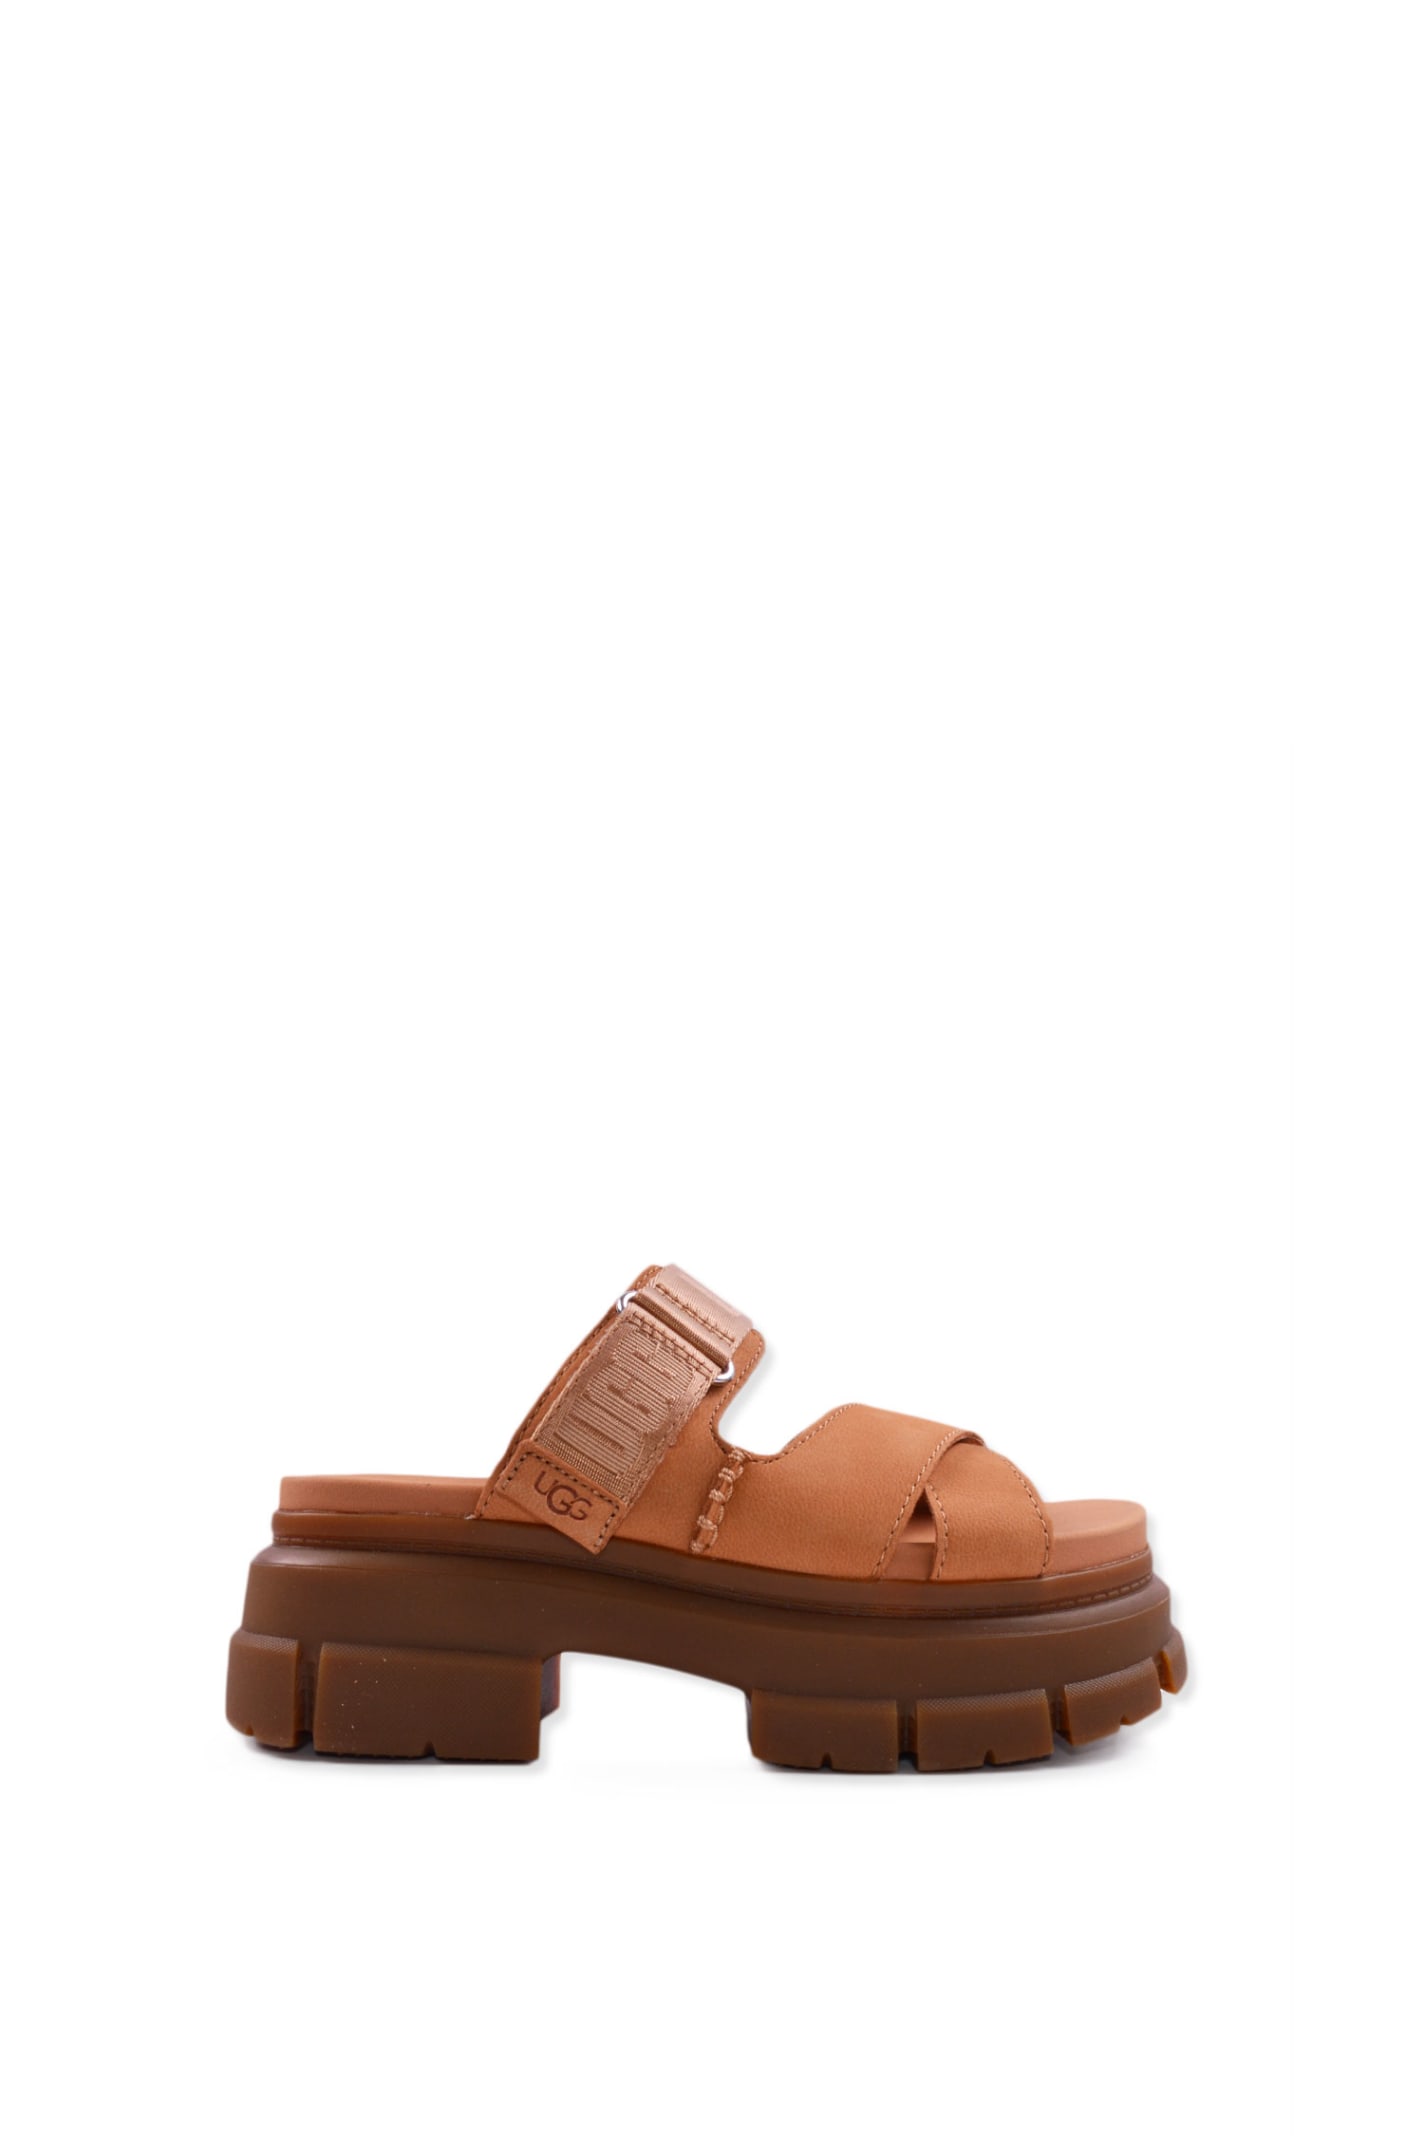 Ugg Kids' Slipper Sandals In Brown